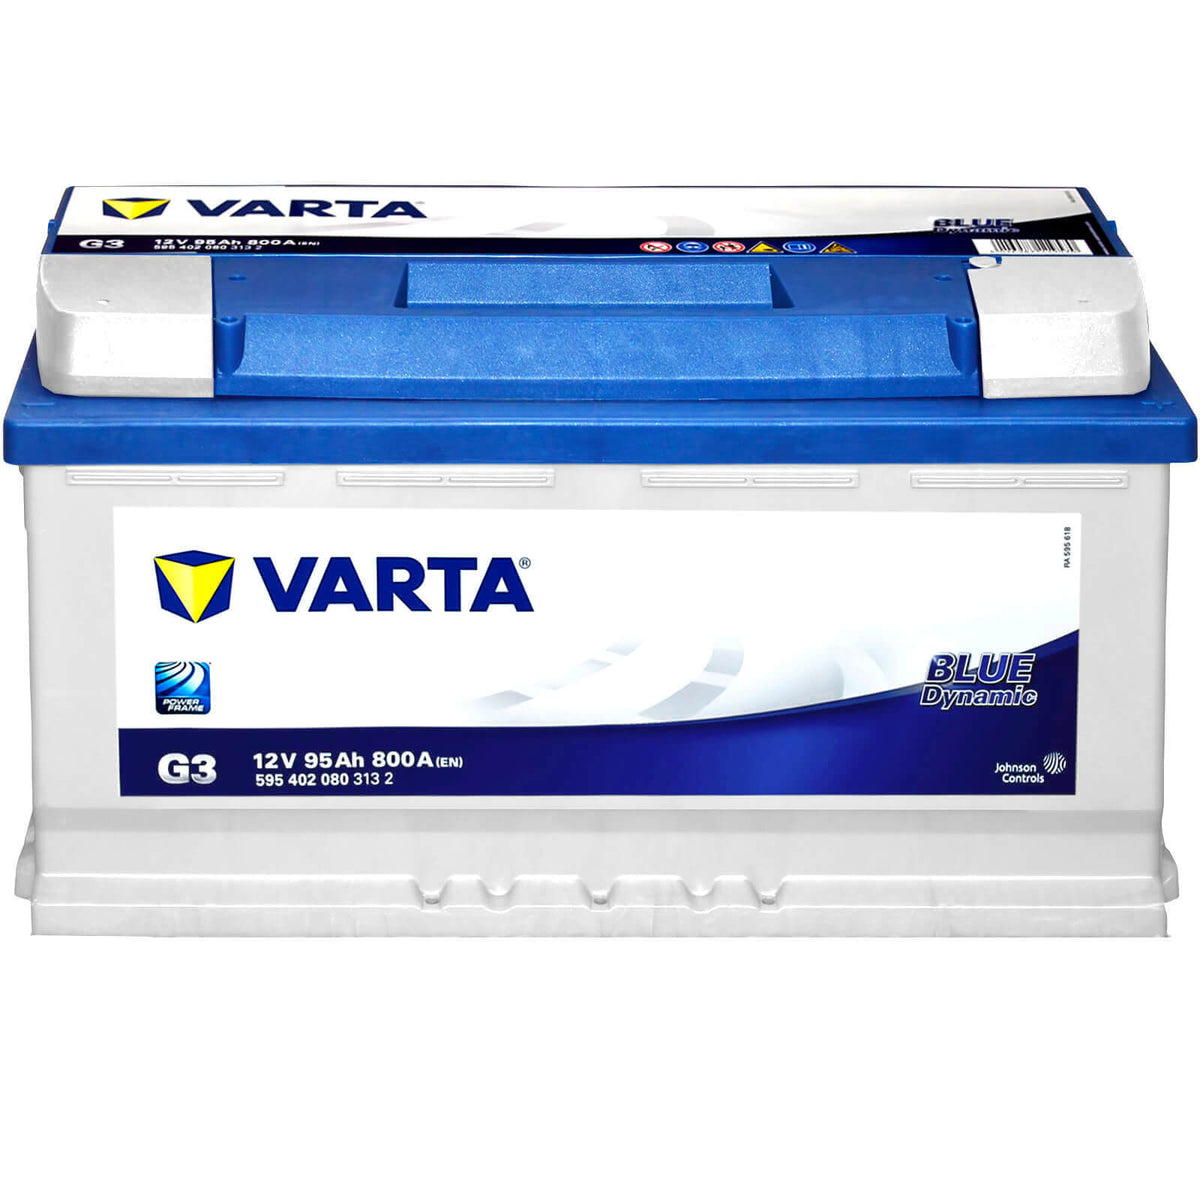 Varta G3 Blue Dynamic 12V 95Ah 800A/EN